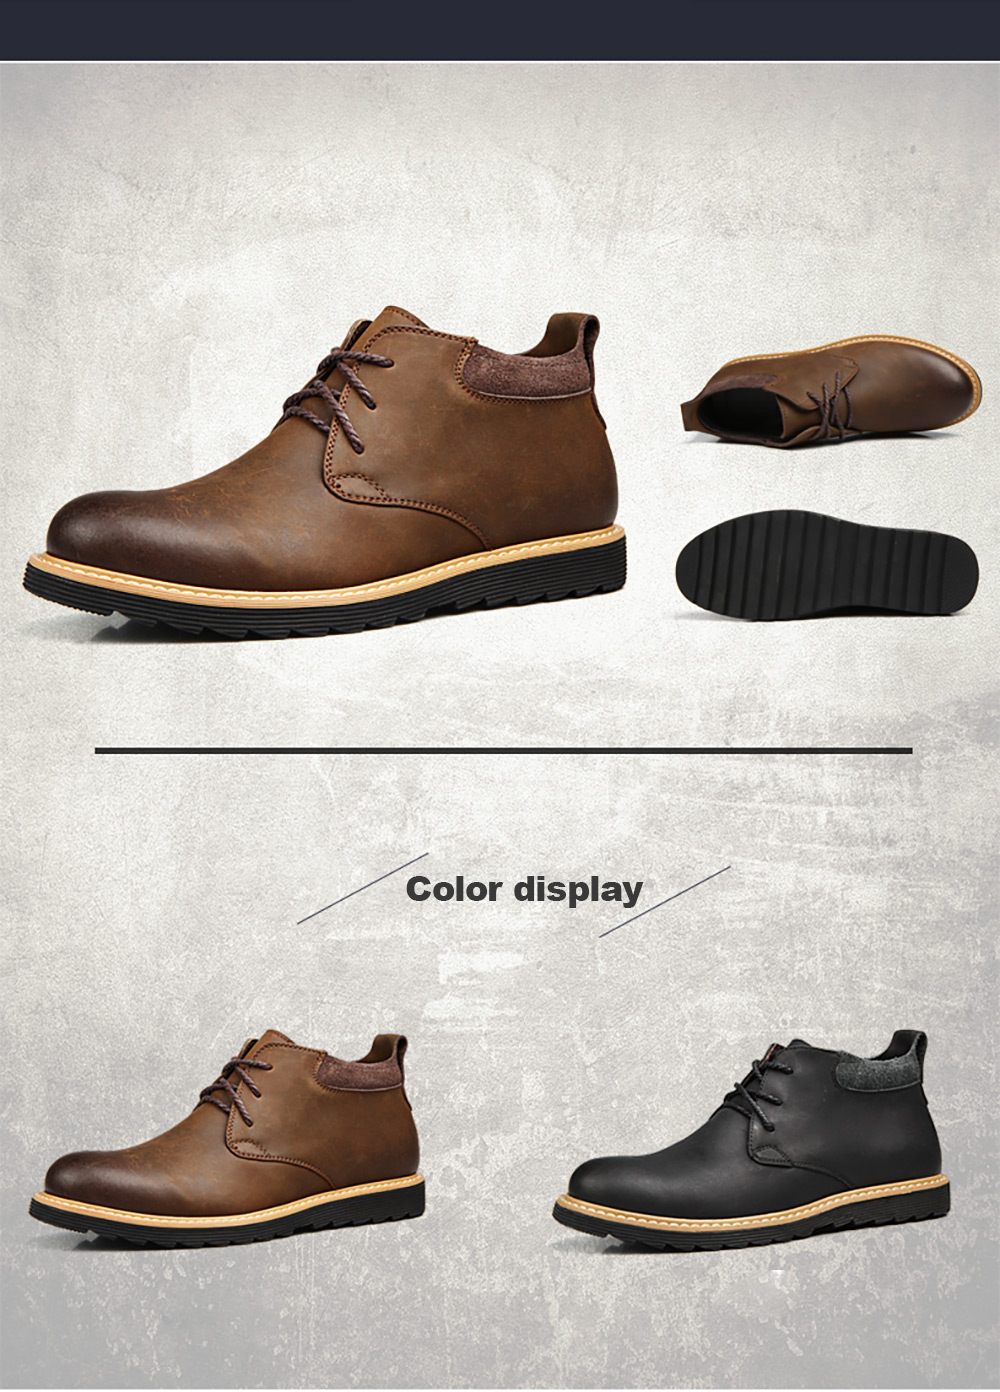 Men's Classic British Style Boots color